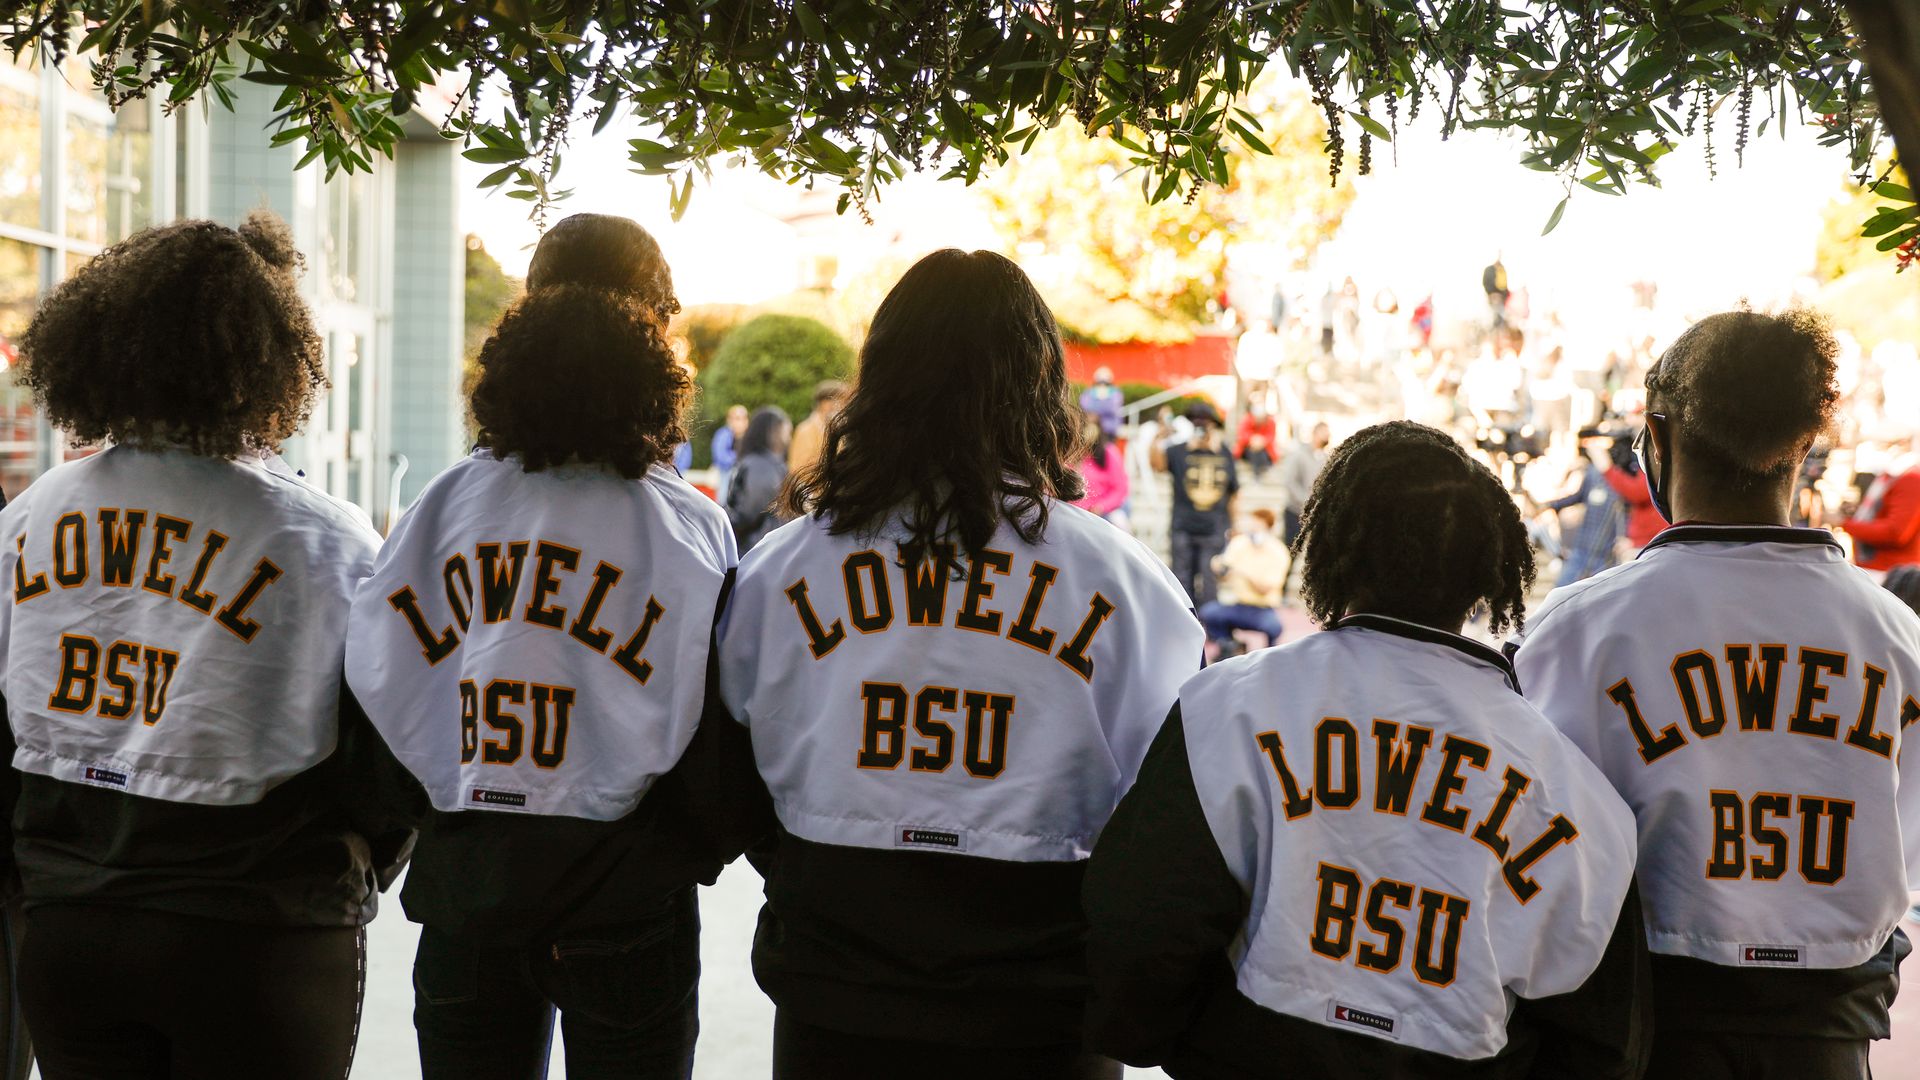 Students wearing "Lowell BSU" jackets.